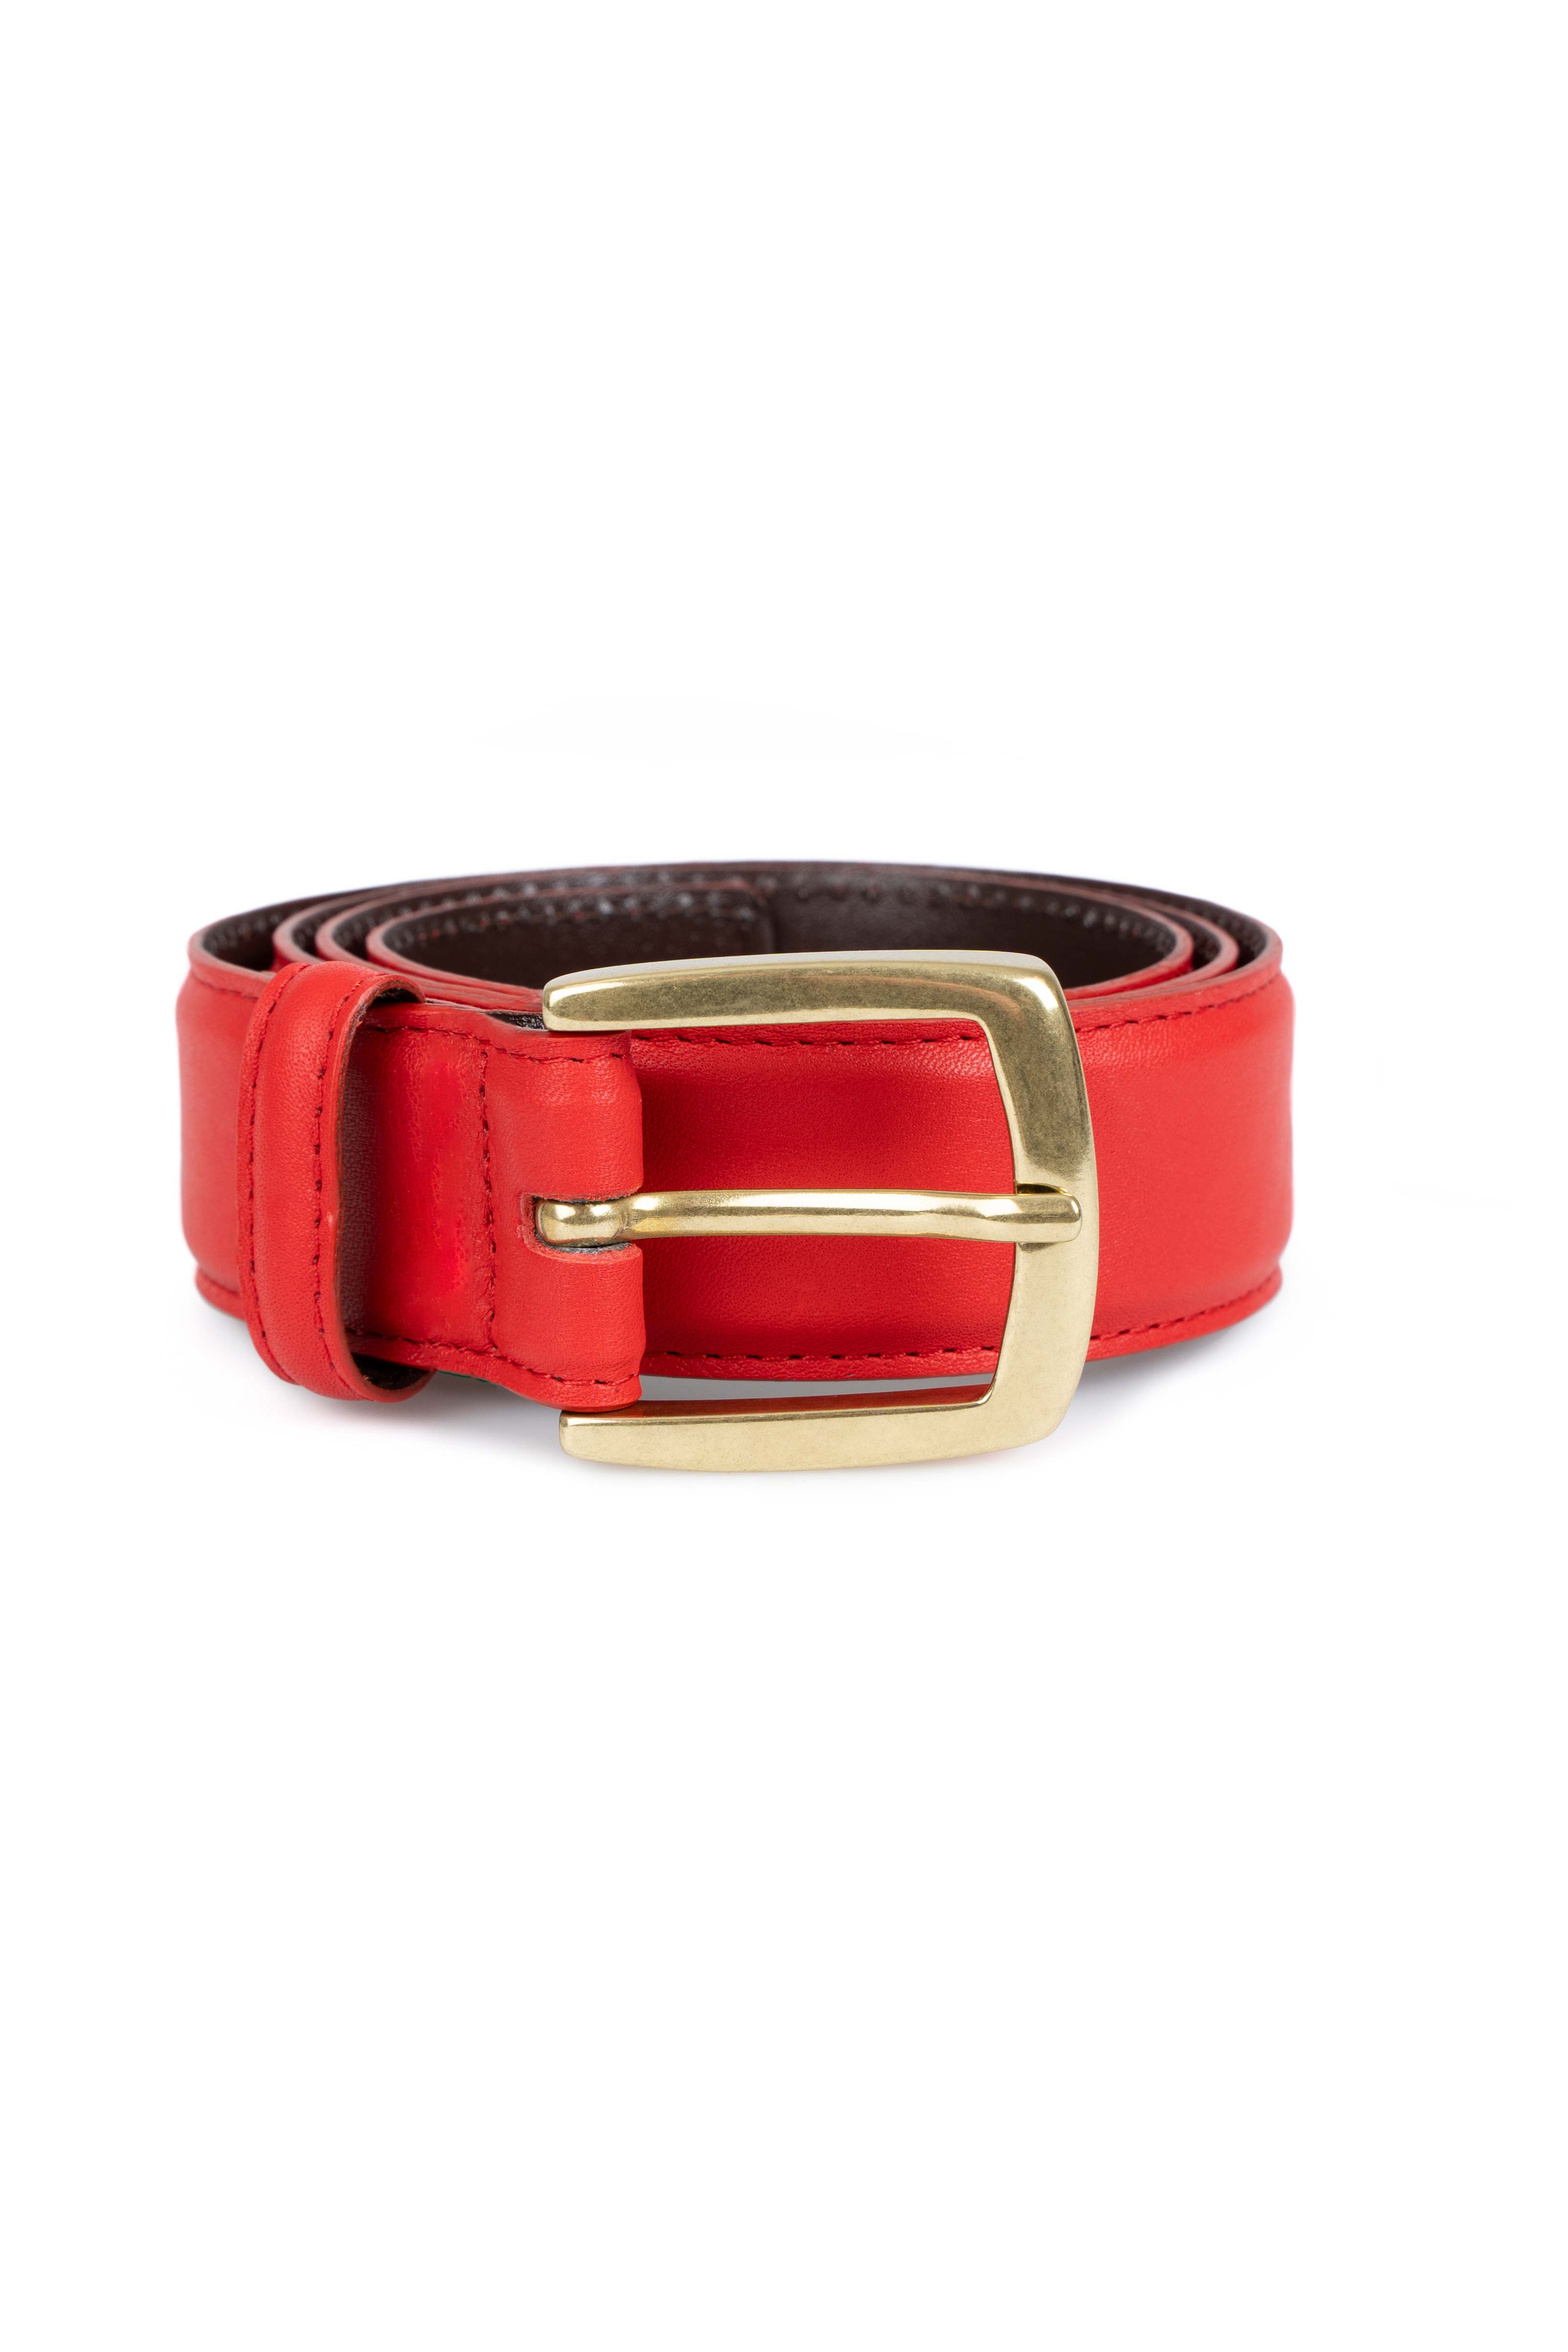 be150_classic-leather-belt_true_red.jpg